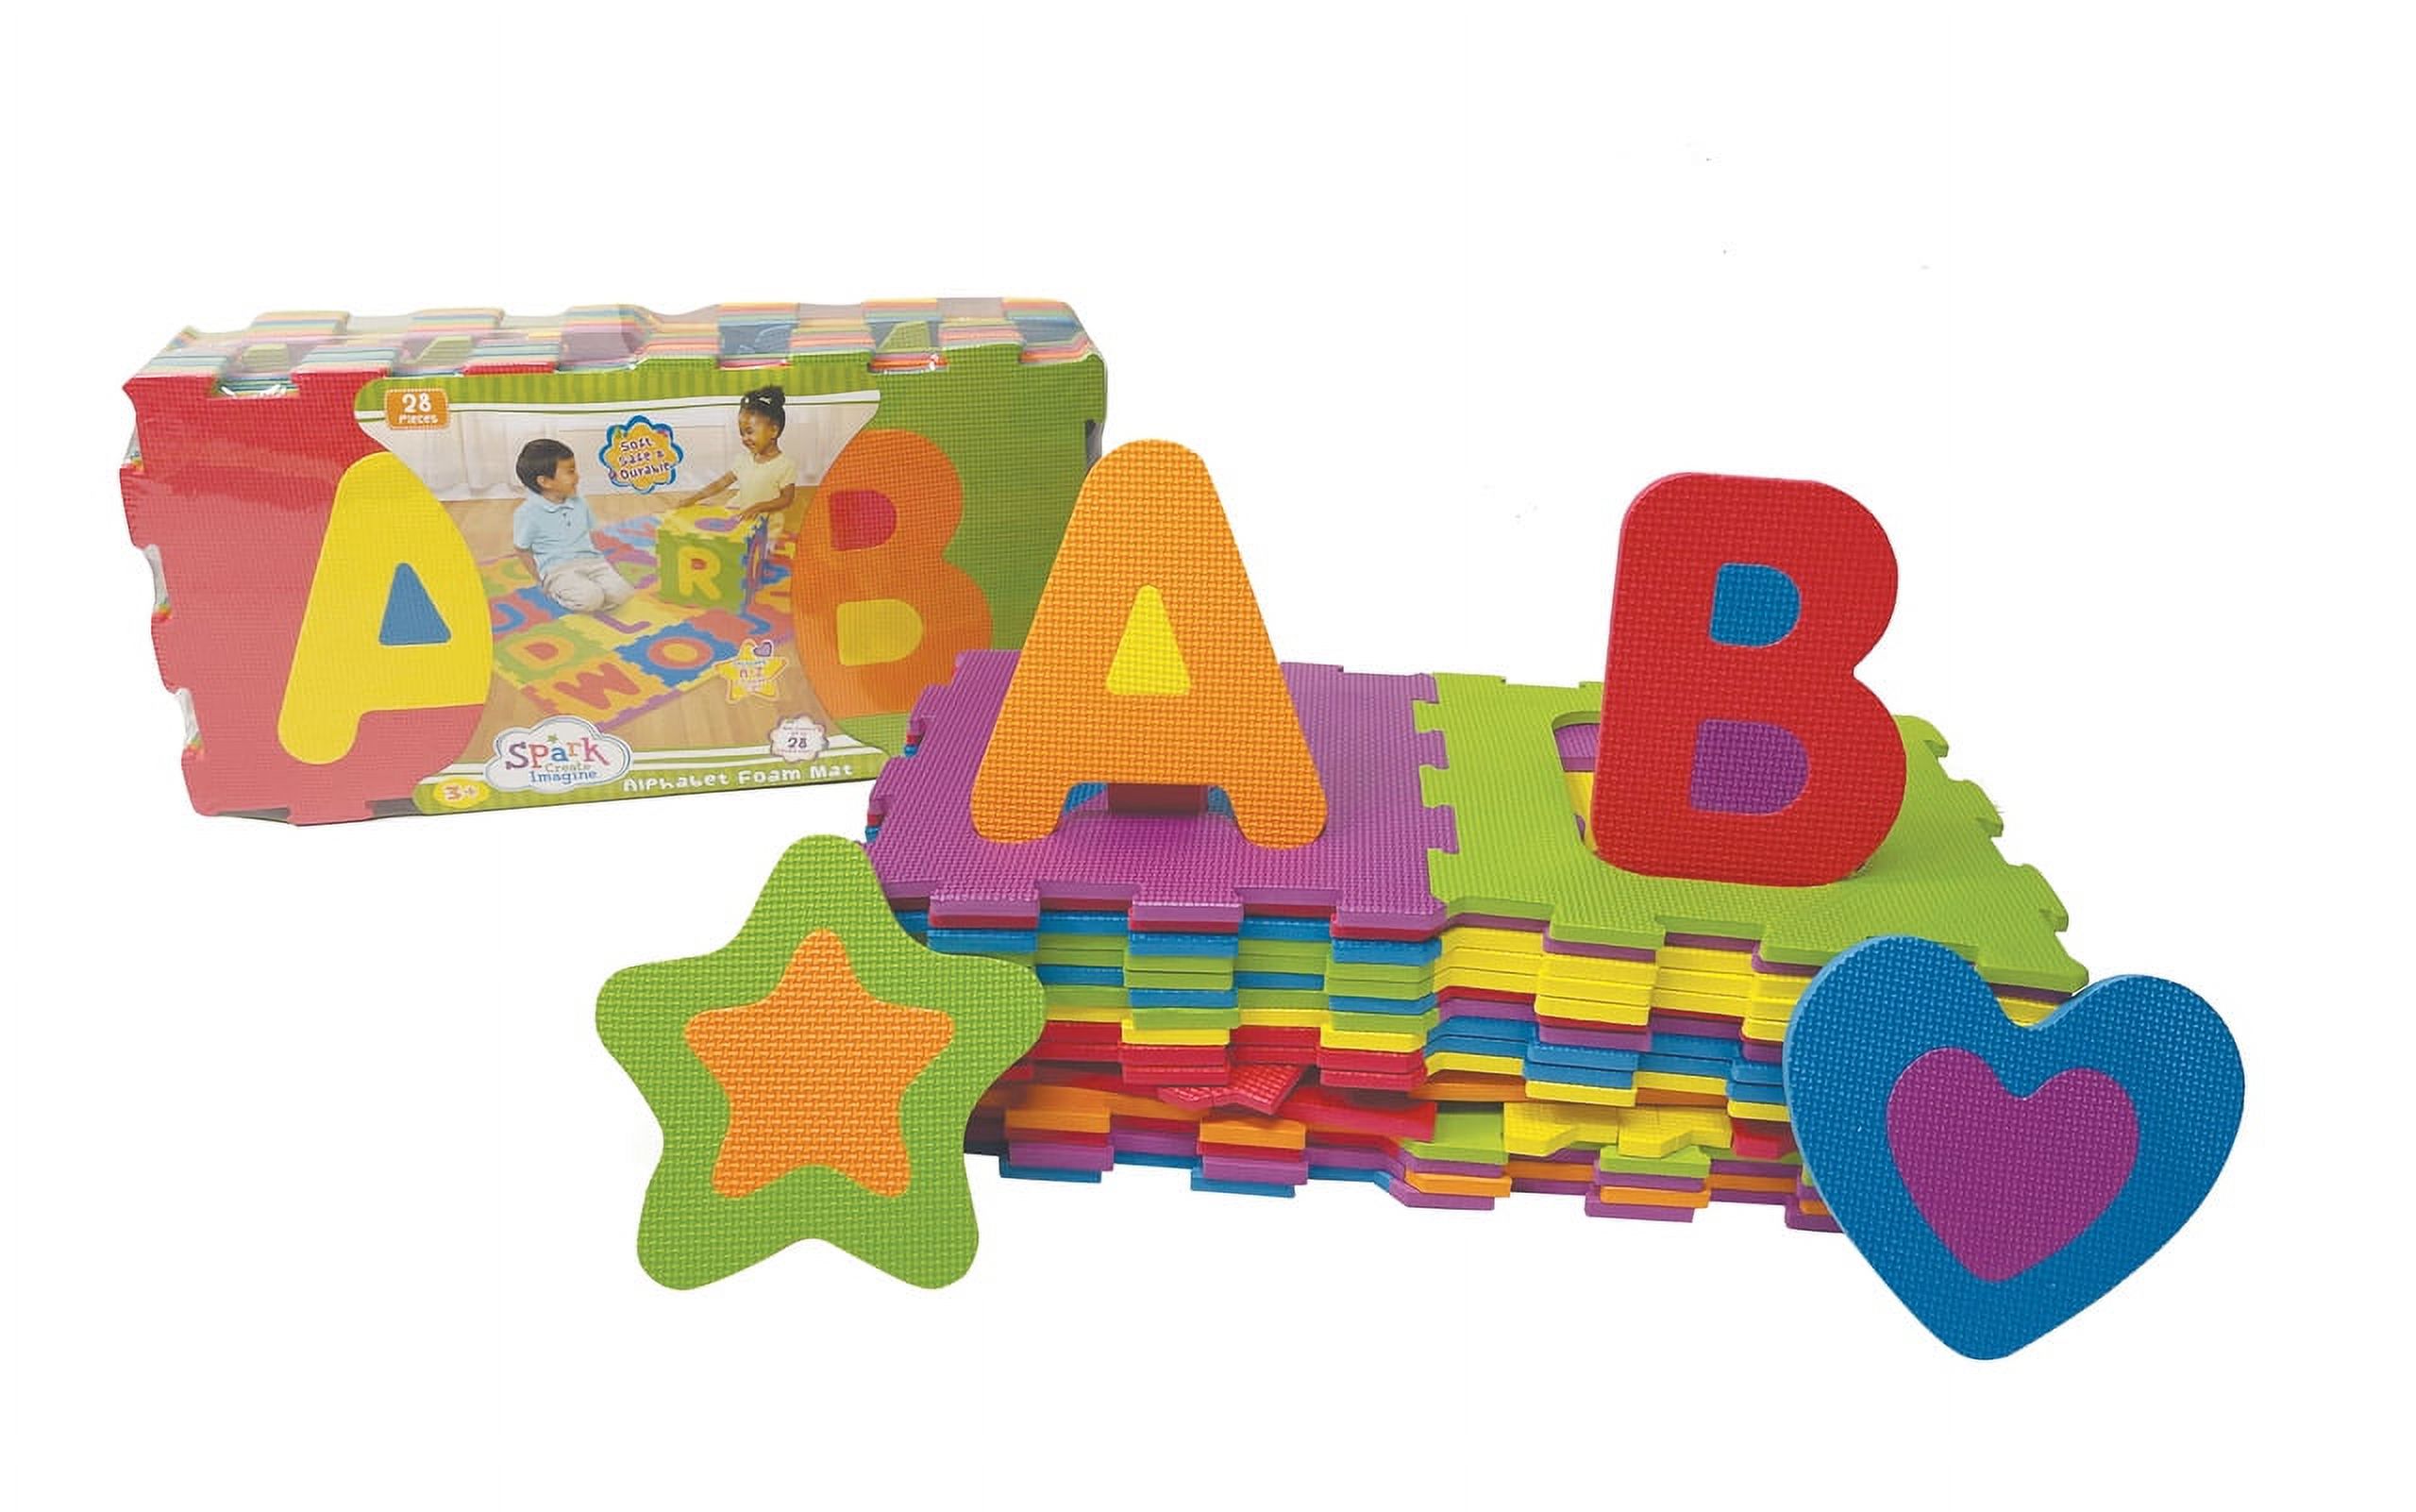 Spark. Create. Imagine. ABC Foam Playmat Learning Toy Set, 28 Pieces, Preschool - image 1 of 7